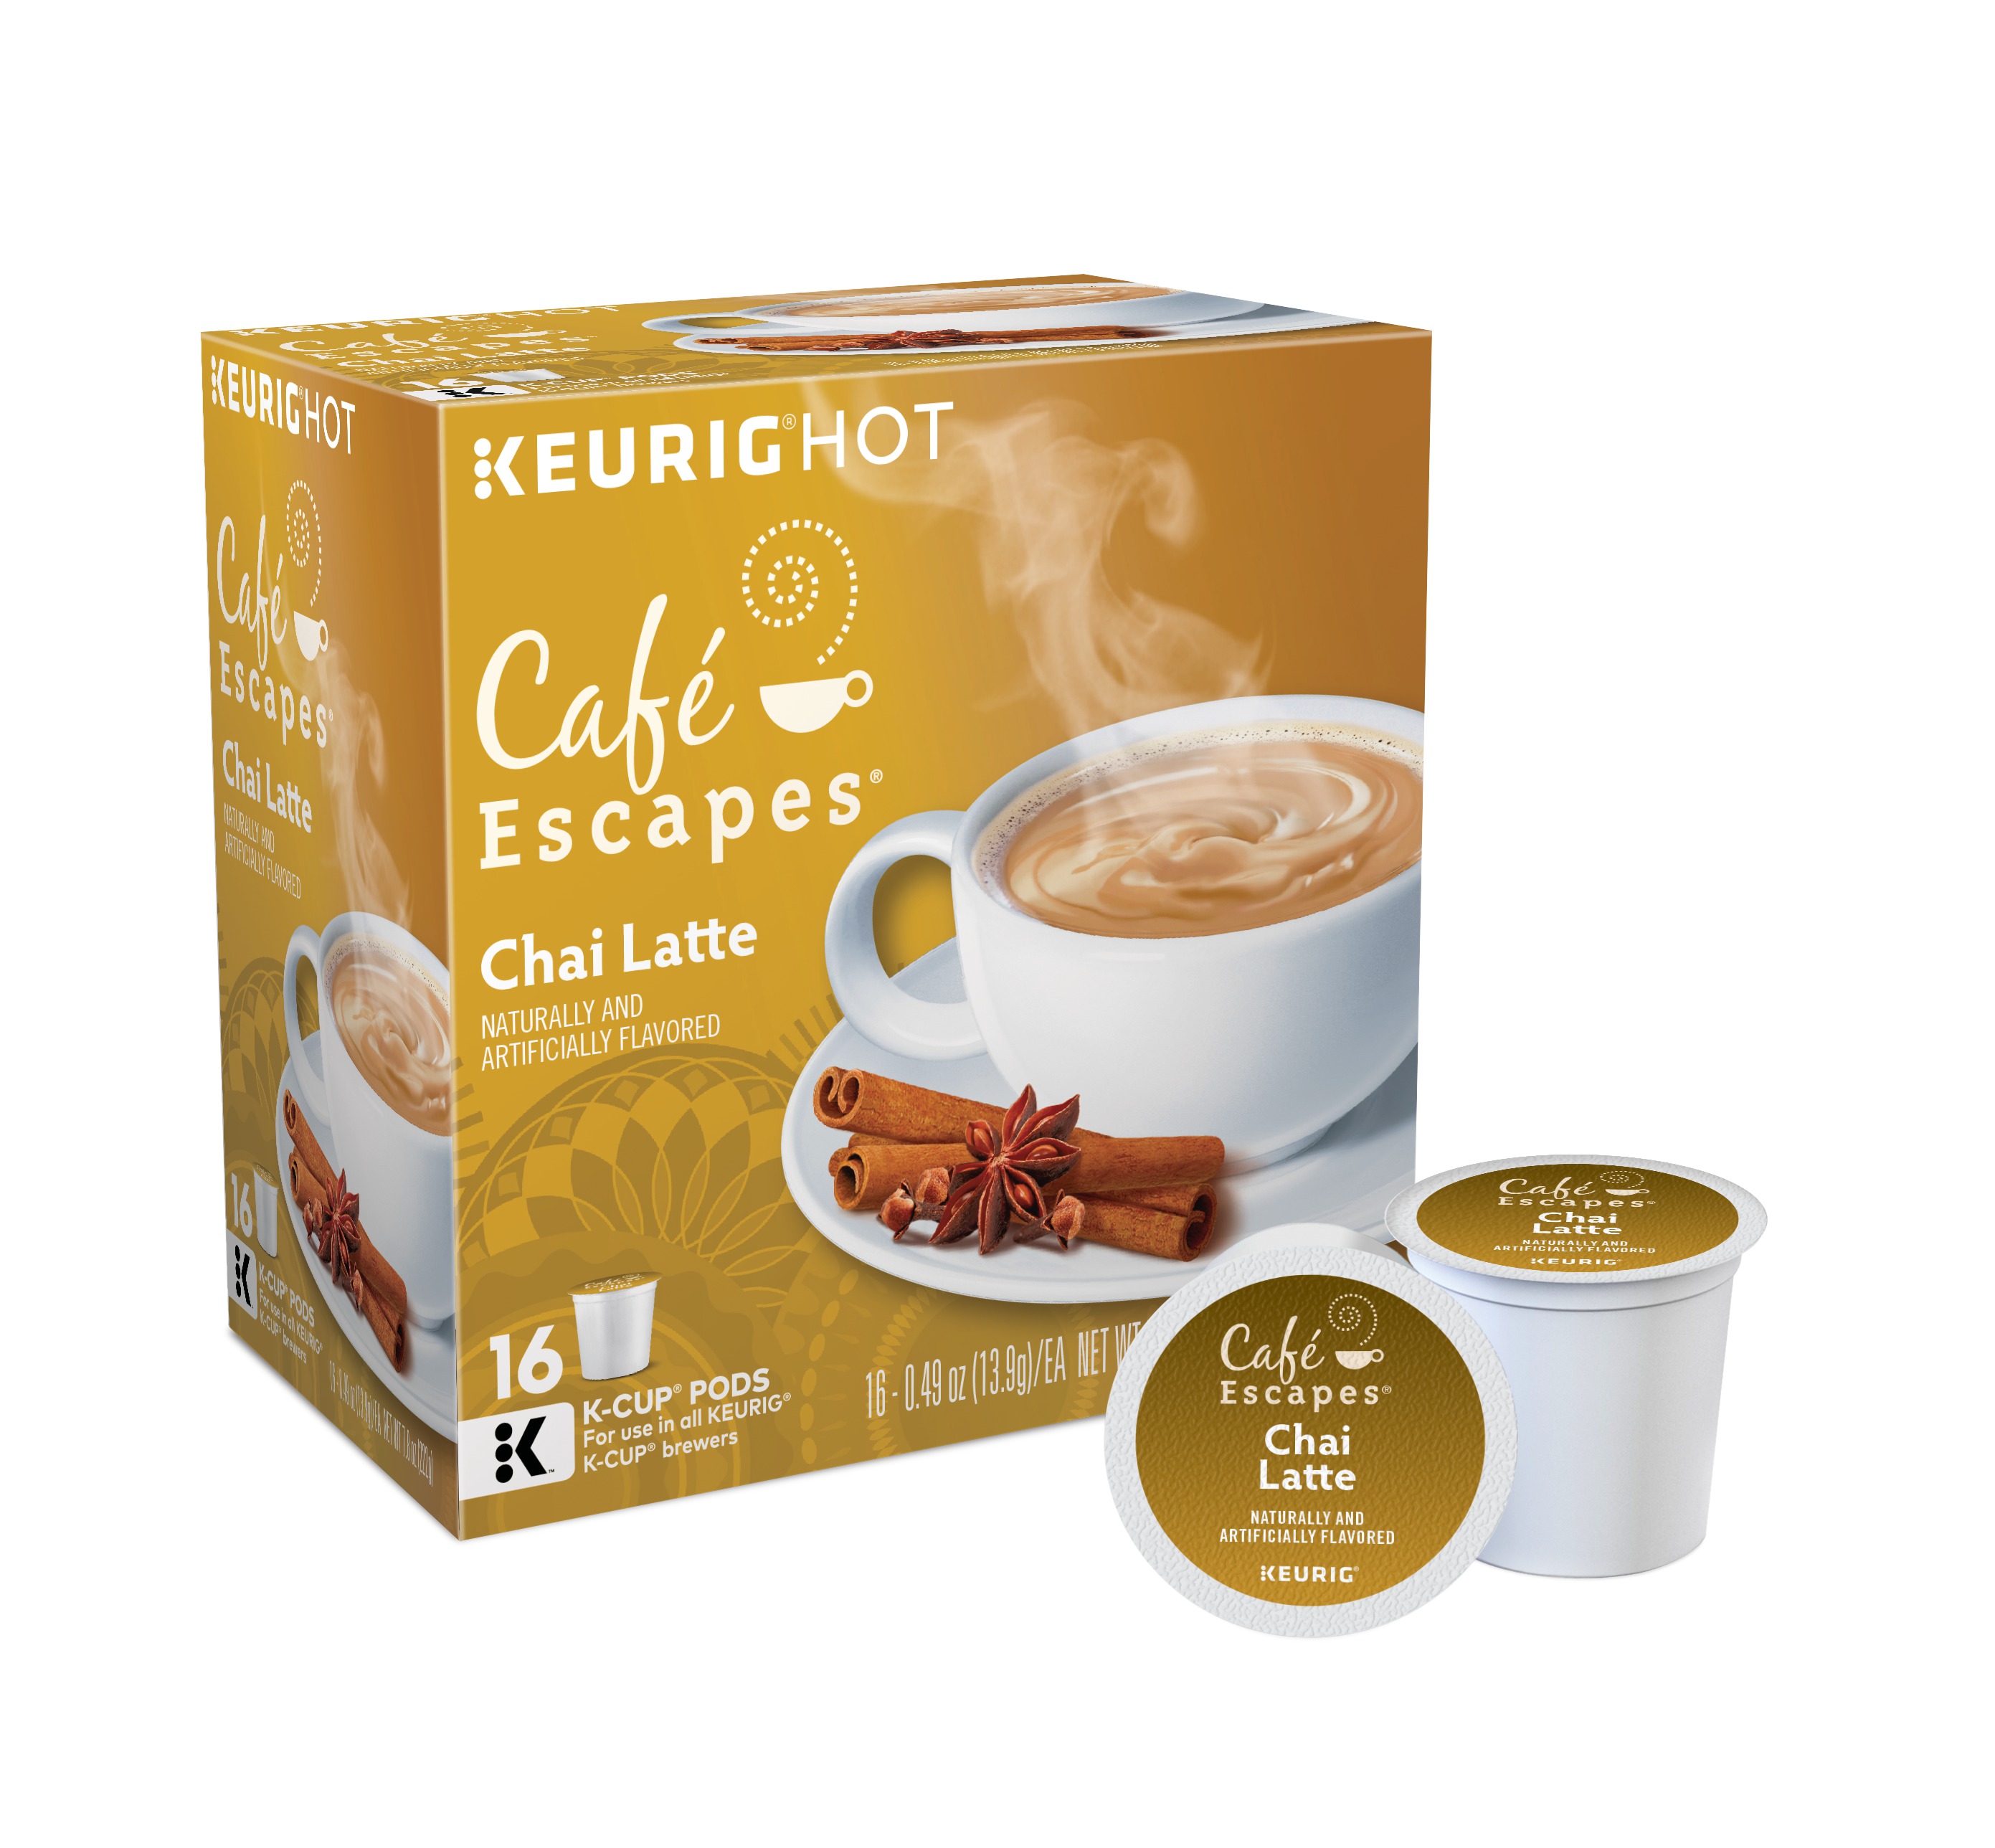 Cafe Escapes Chai Latte, Keurig K-Cup Pods, Contains Milk, 16ct - image 1 of 6